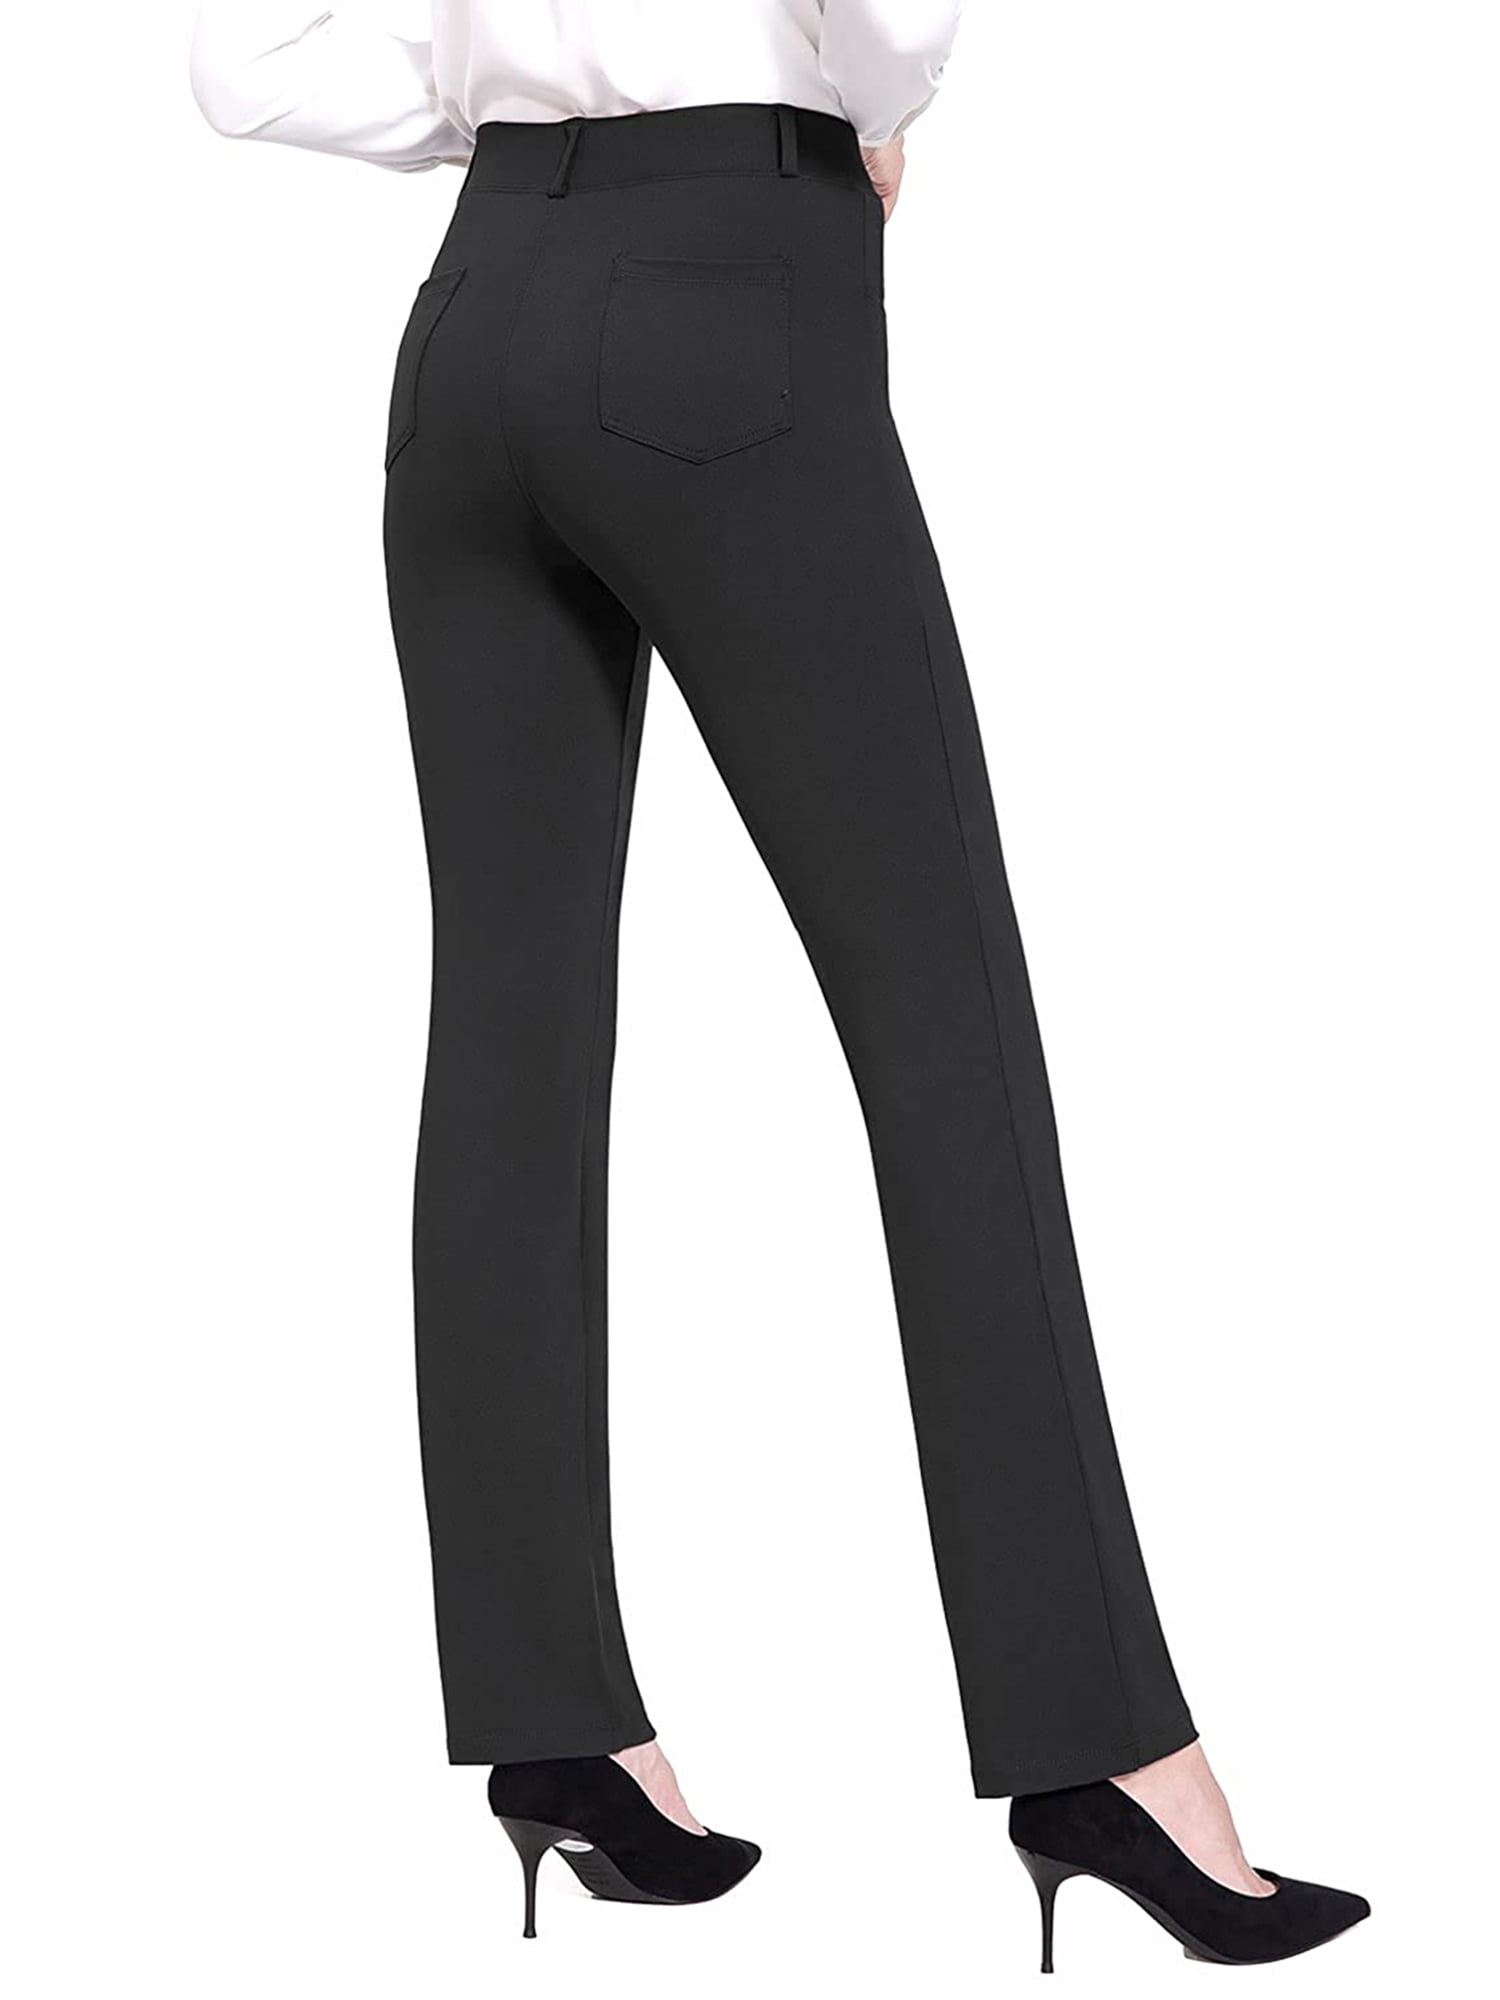 Bamans Women's Bootcut Pull-On Dress Pants Office Business Casual Yoga Work  Pants with Key Pocket Straight Leg, Black, M price in Saudi Arabia | Amazon  Saudi Arabia | kanbkam